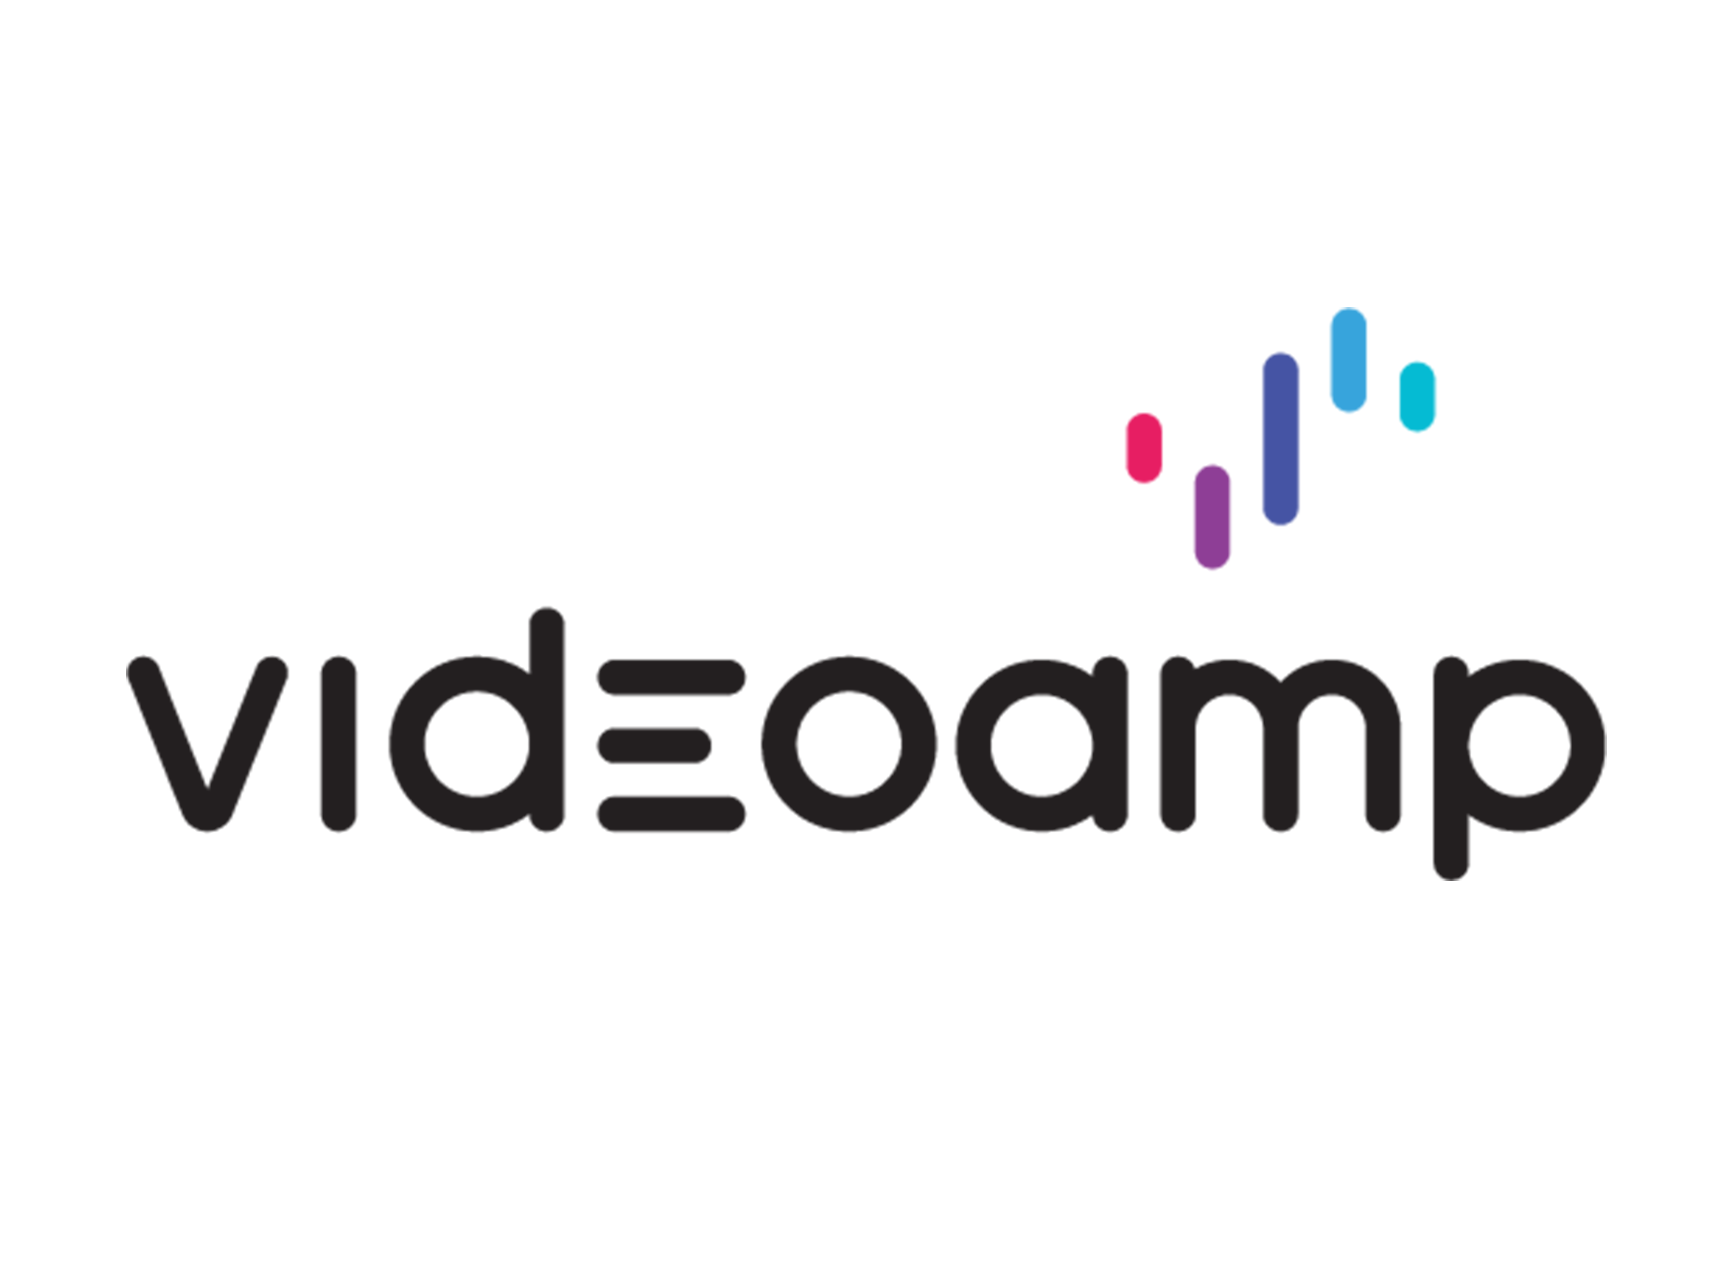 VideoAmp